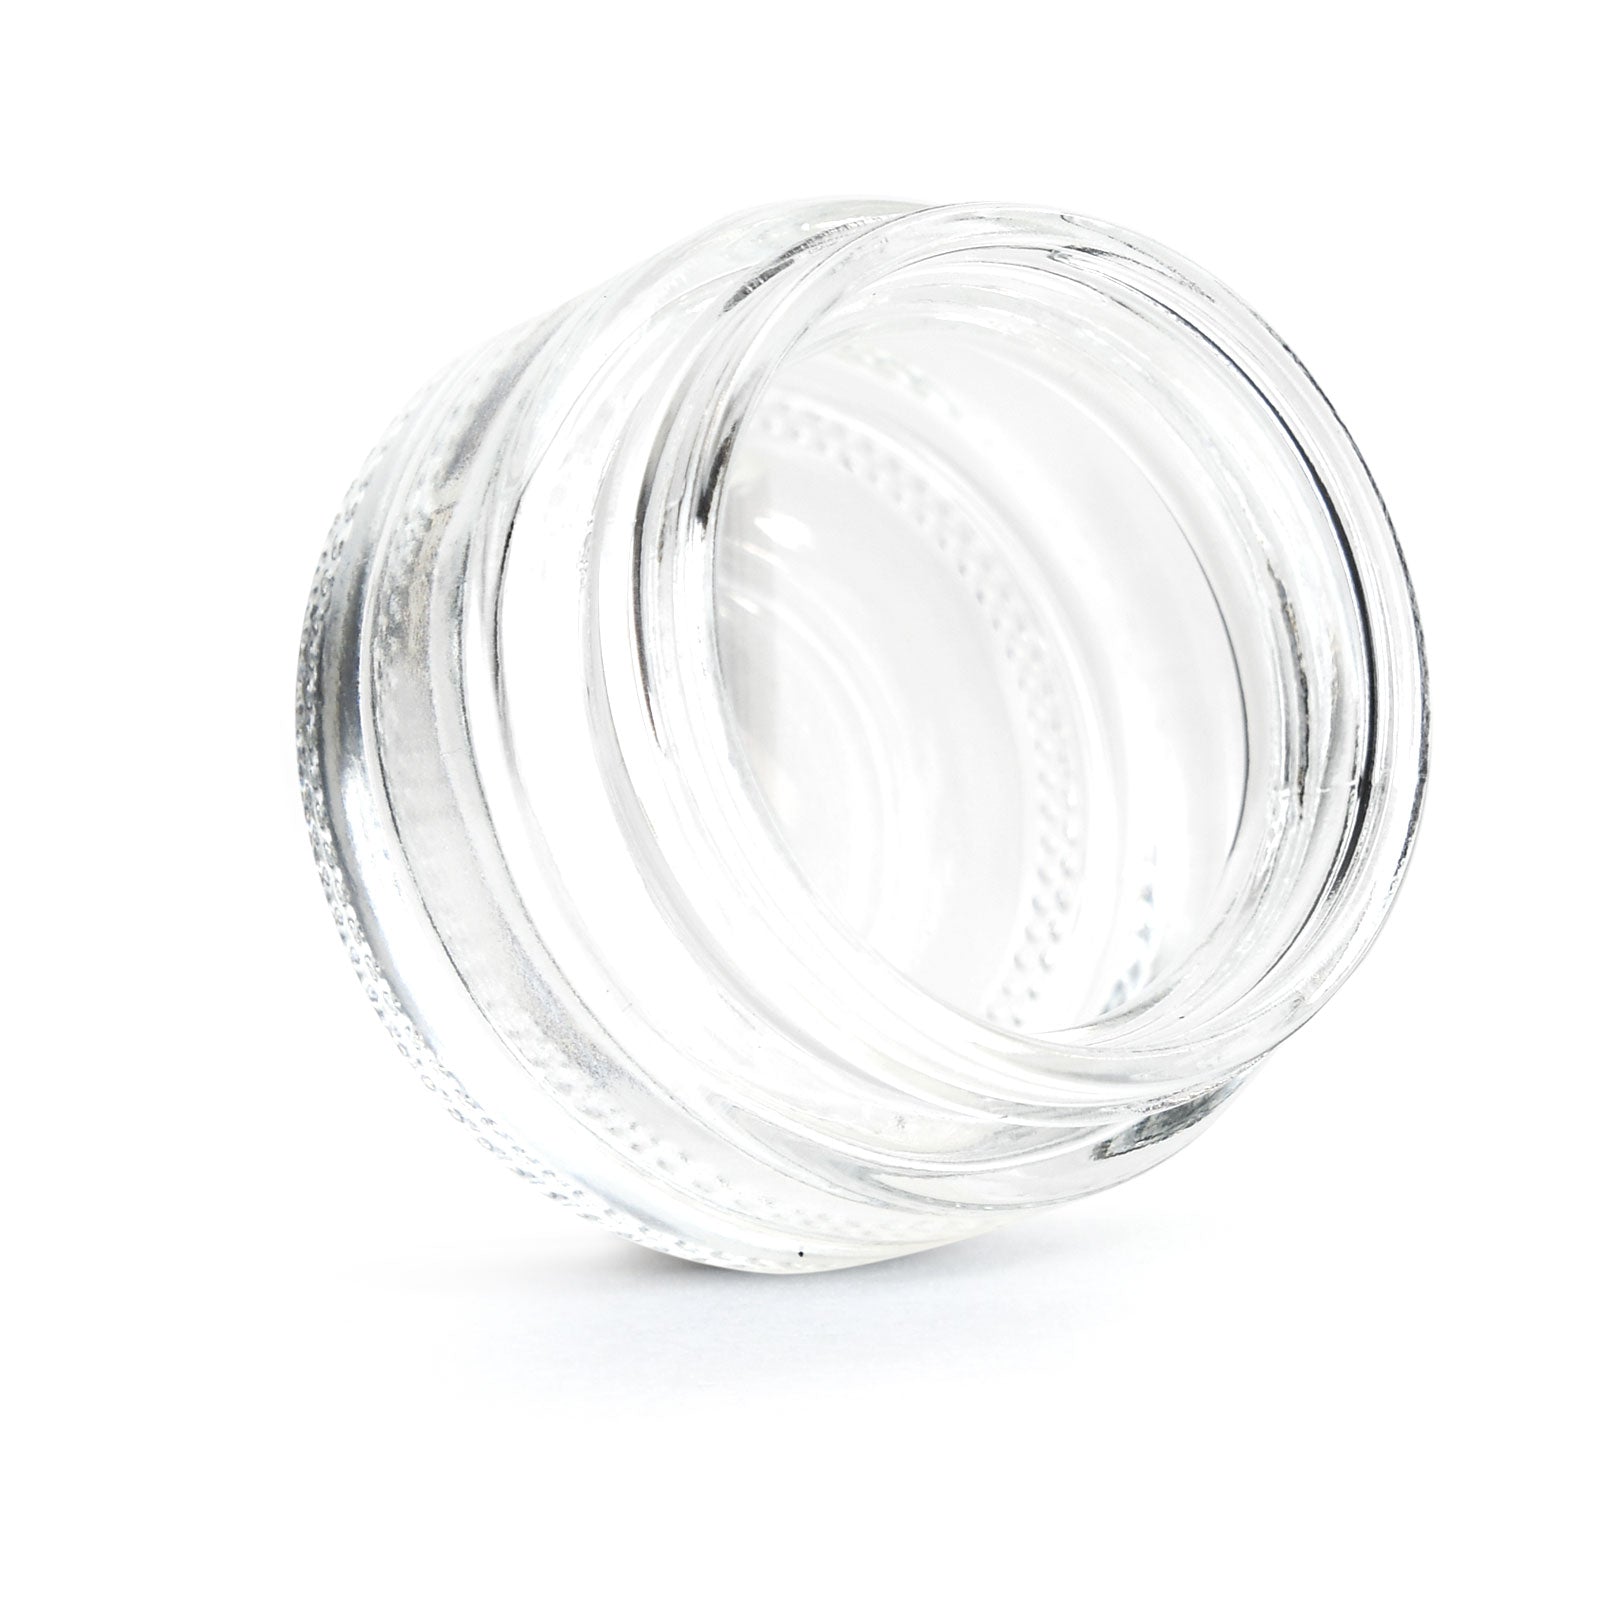 1oz Child Resistant Glass Jars With Black Caps - 1-2 Grams - 200 Count